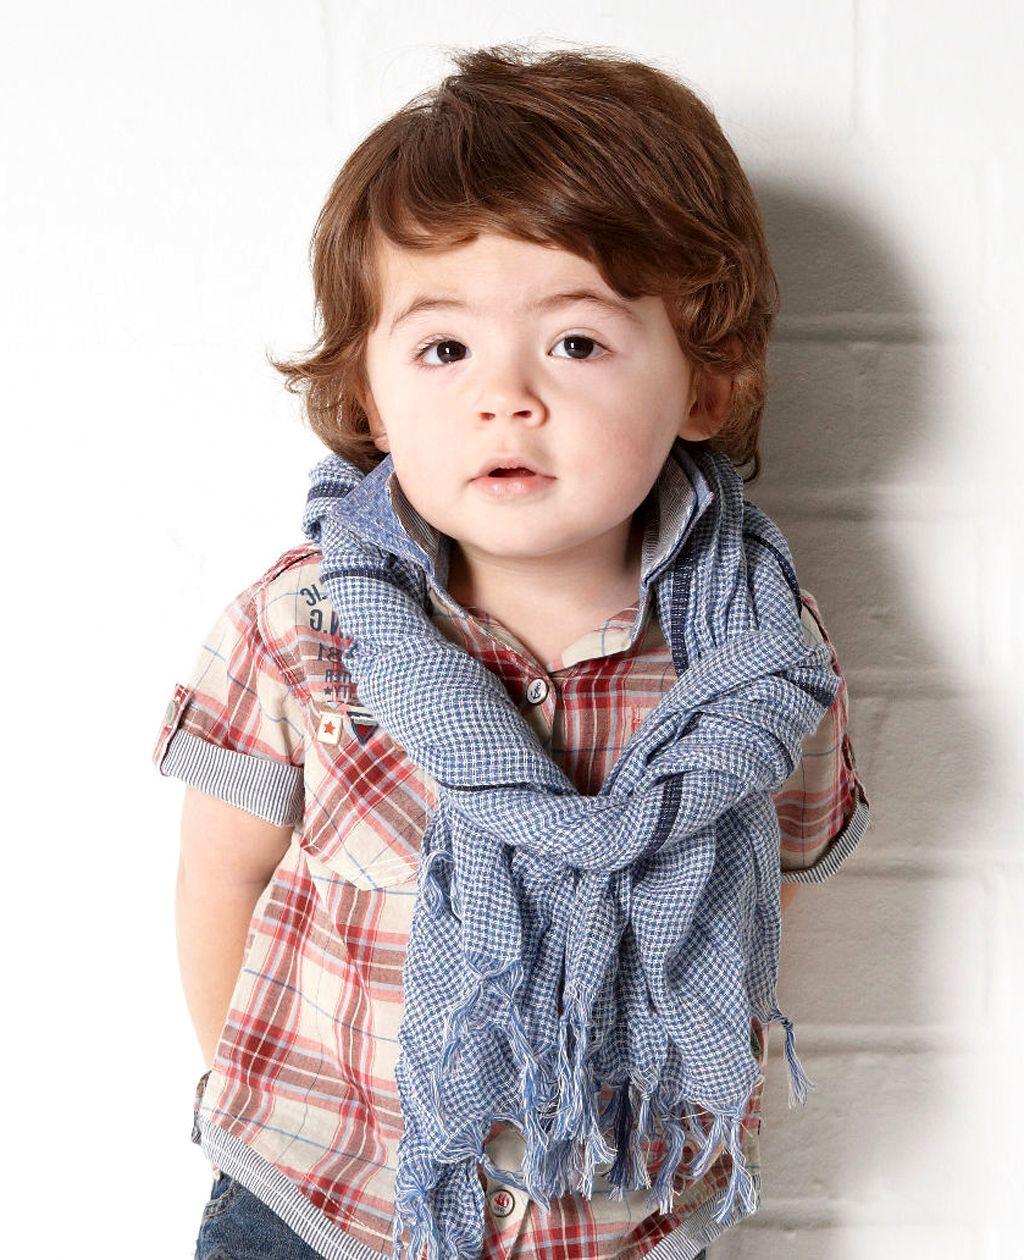 cutest kids Boy Baby Wallpaper Download Cool Looking Boy